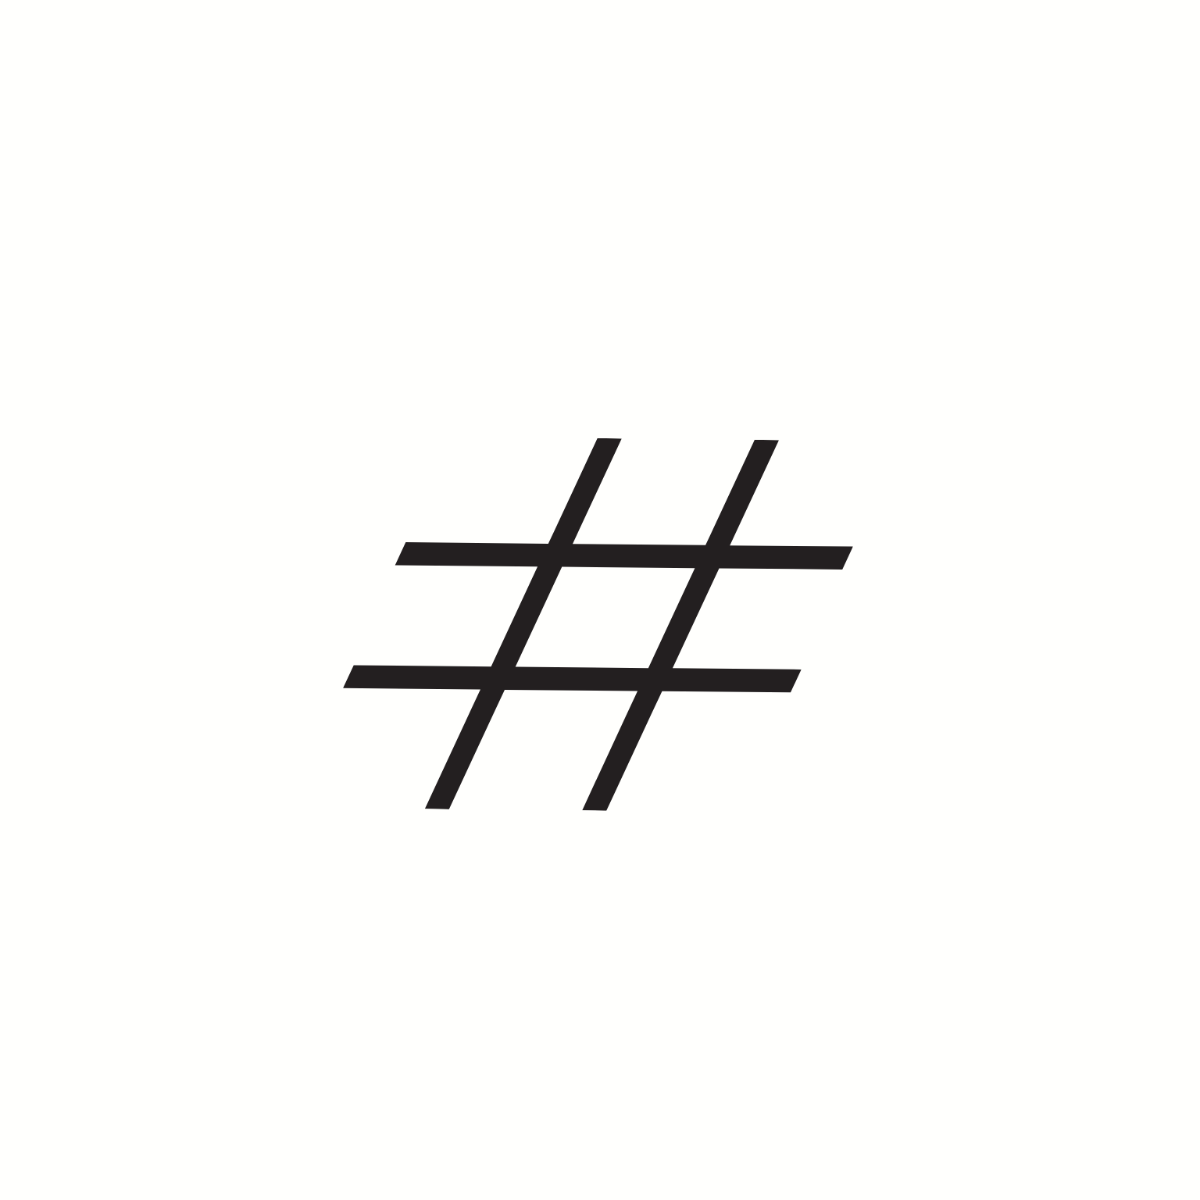 X Hashtag